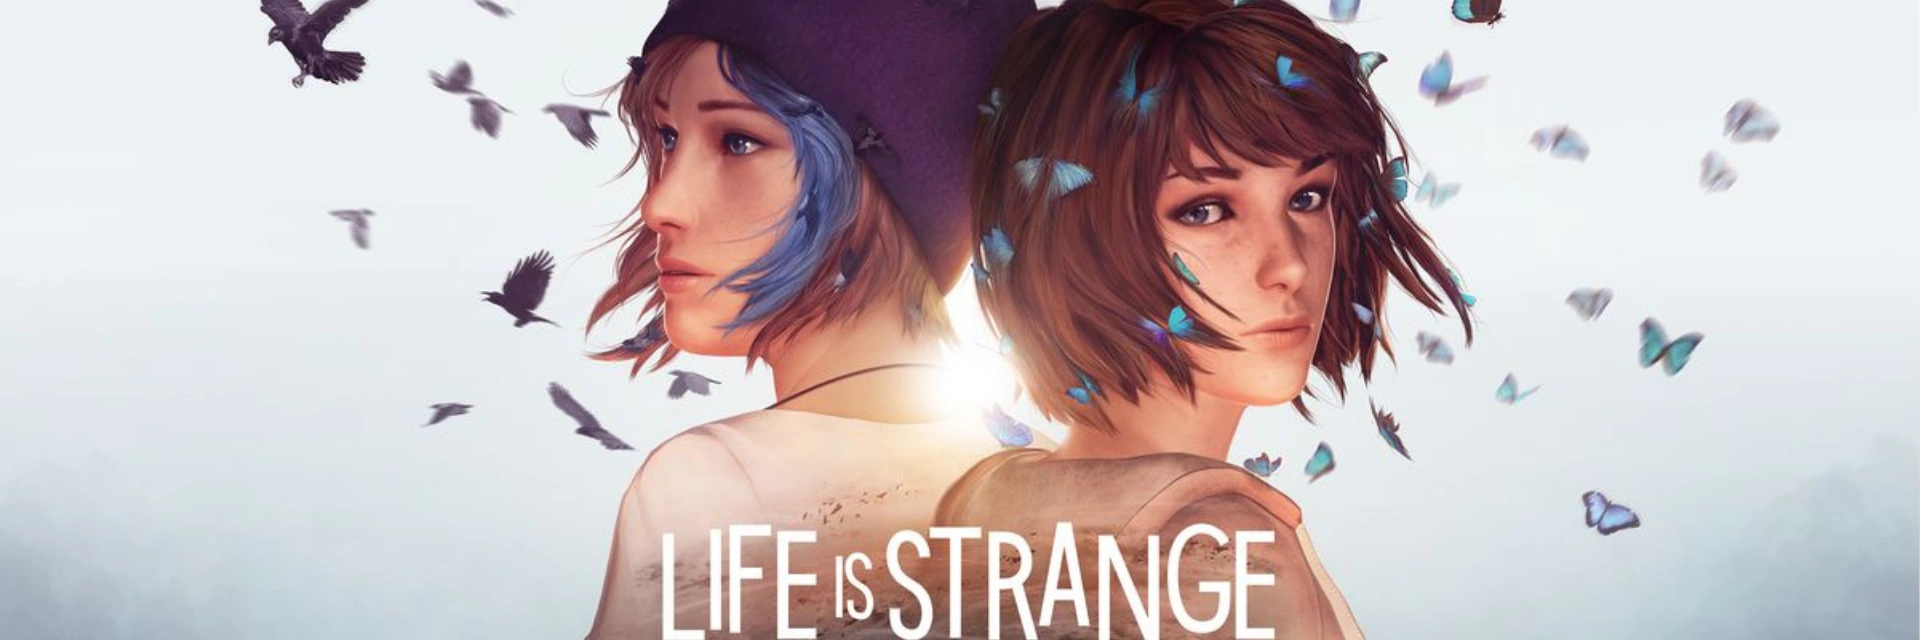 life.is .strange.remastered.banner2